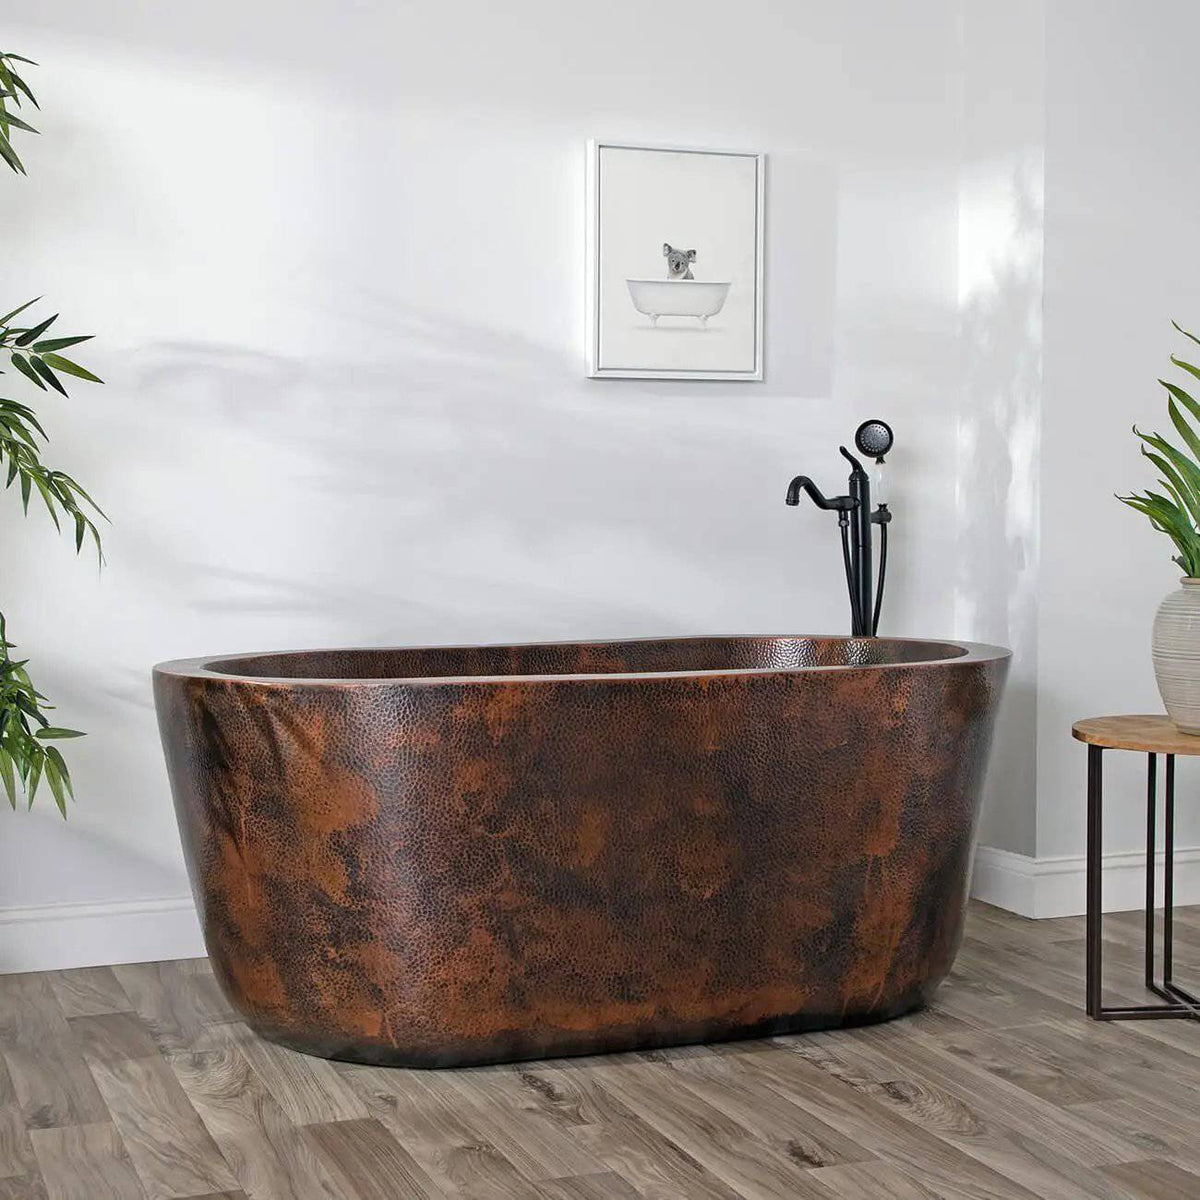 Fobest Handmade Double-Wall Custom Copper Bathtub FDT-2 - -Fobest Appliance